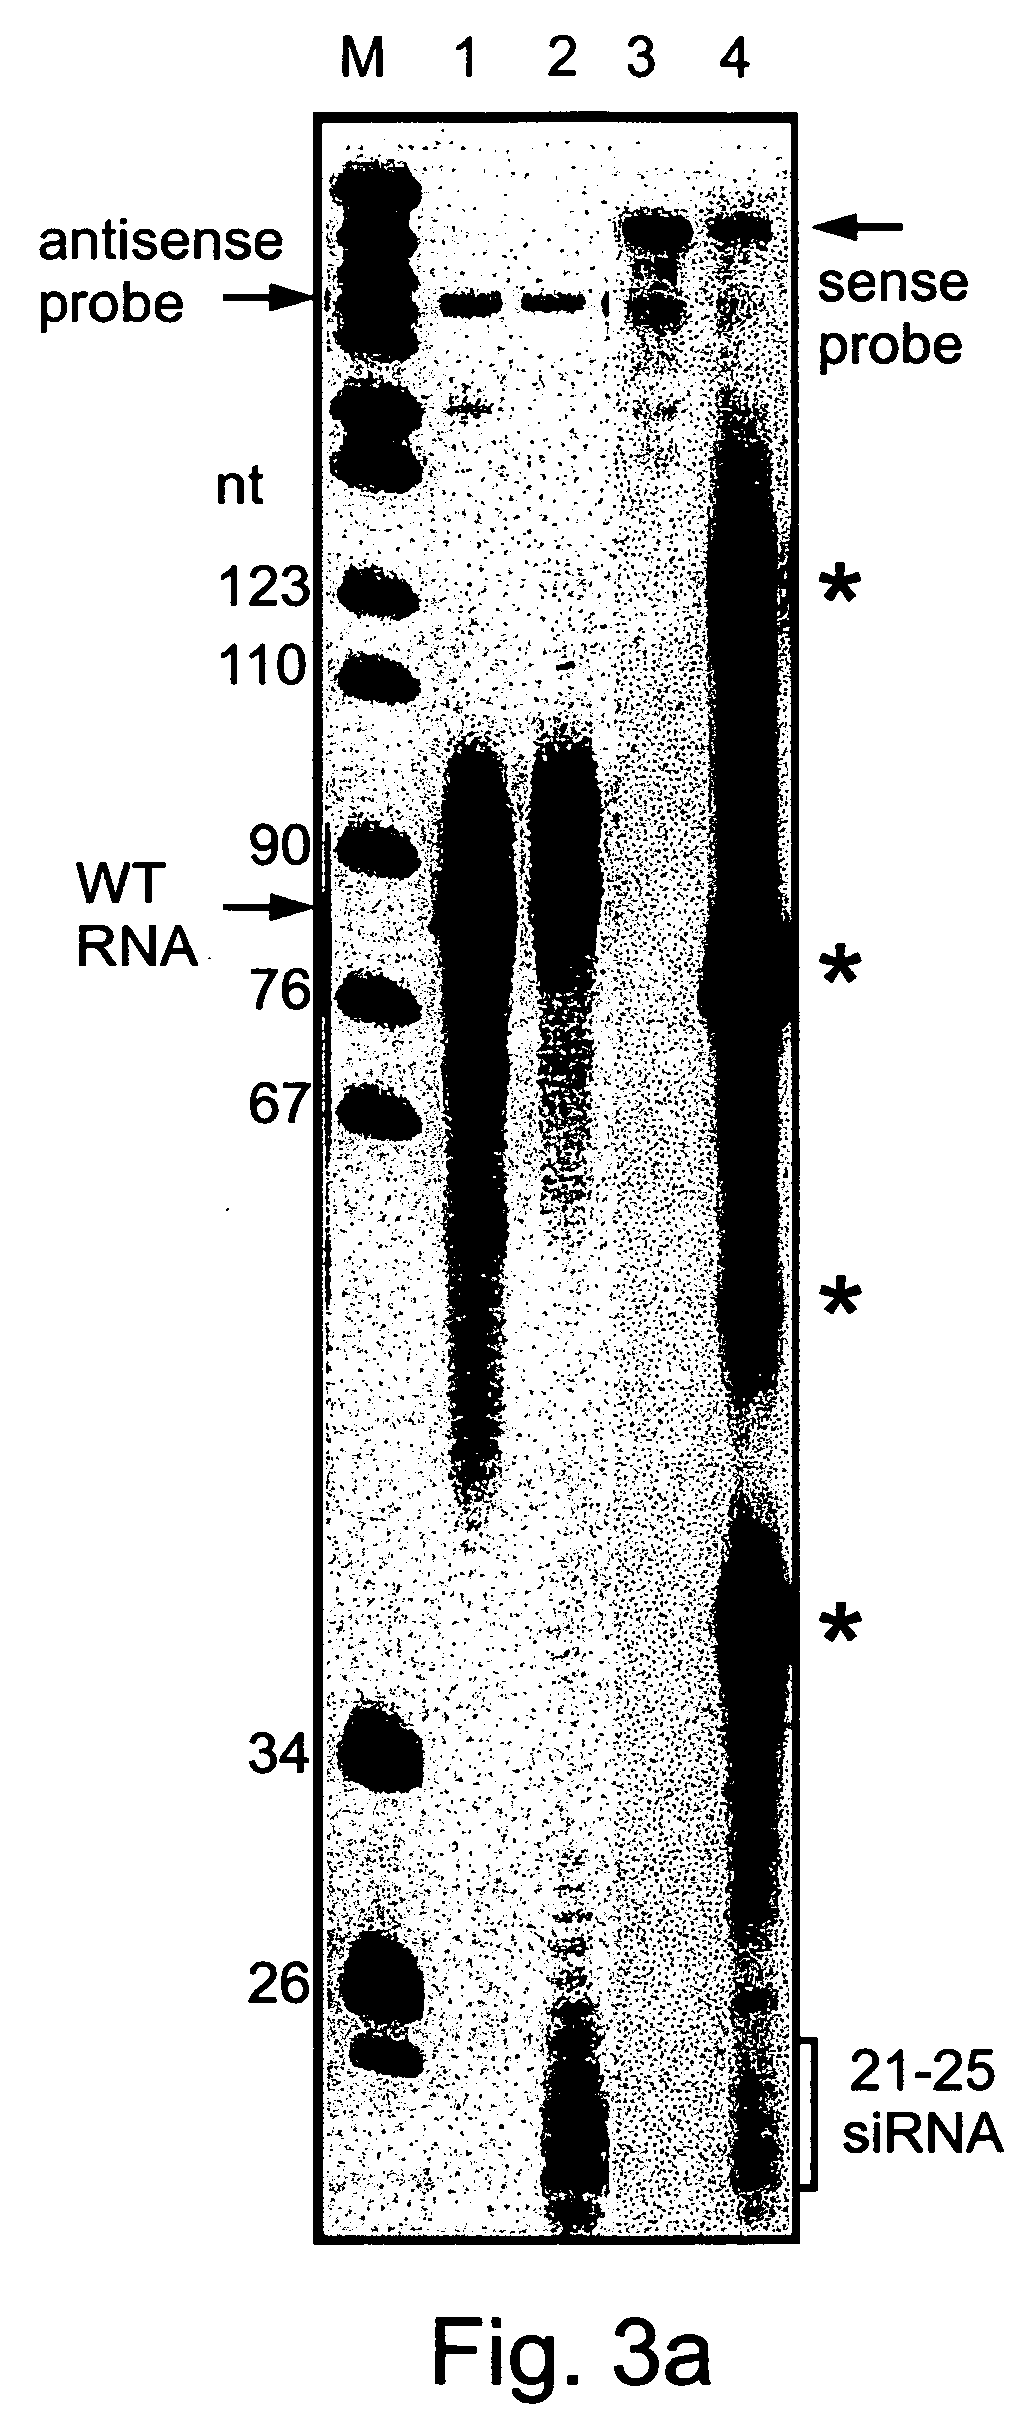 Snornai-small nucleolar rna degradation by rna interference in trypanosomatids